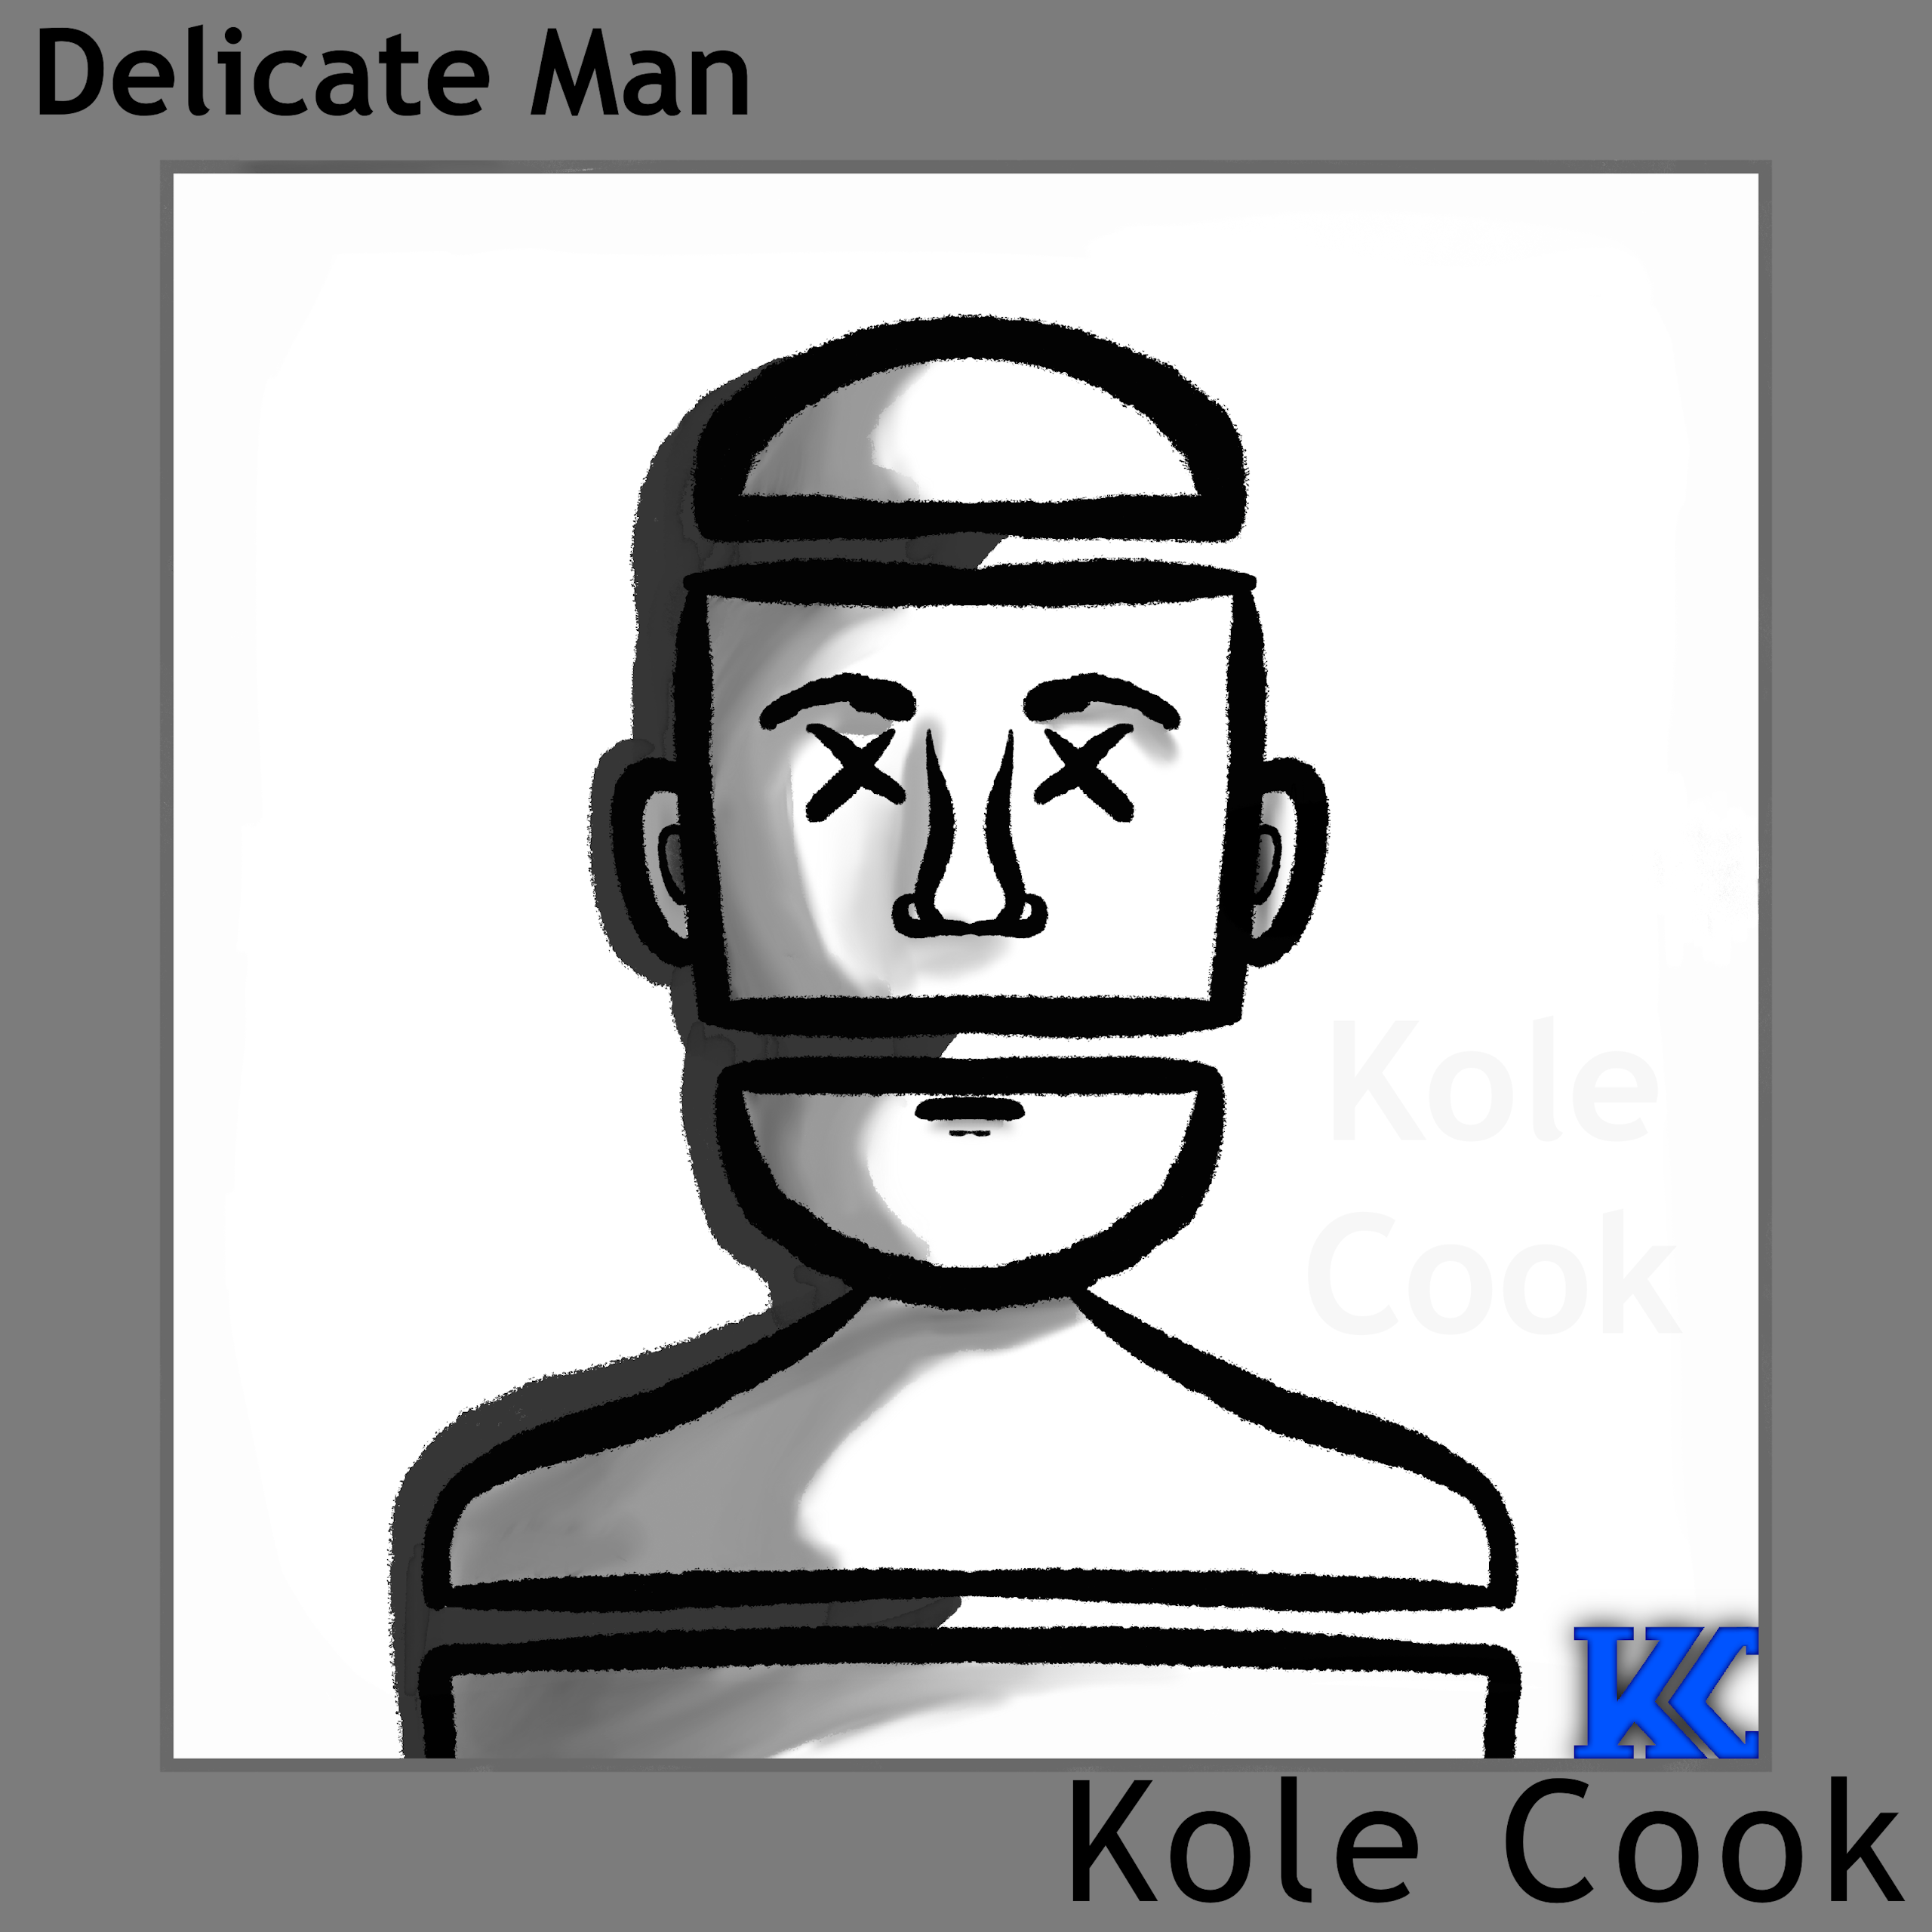 Delicate Man by Kole Cook